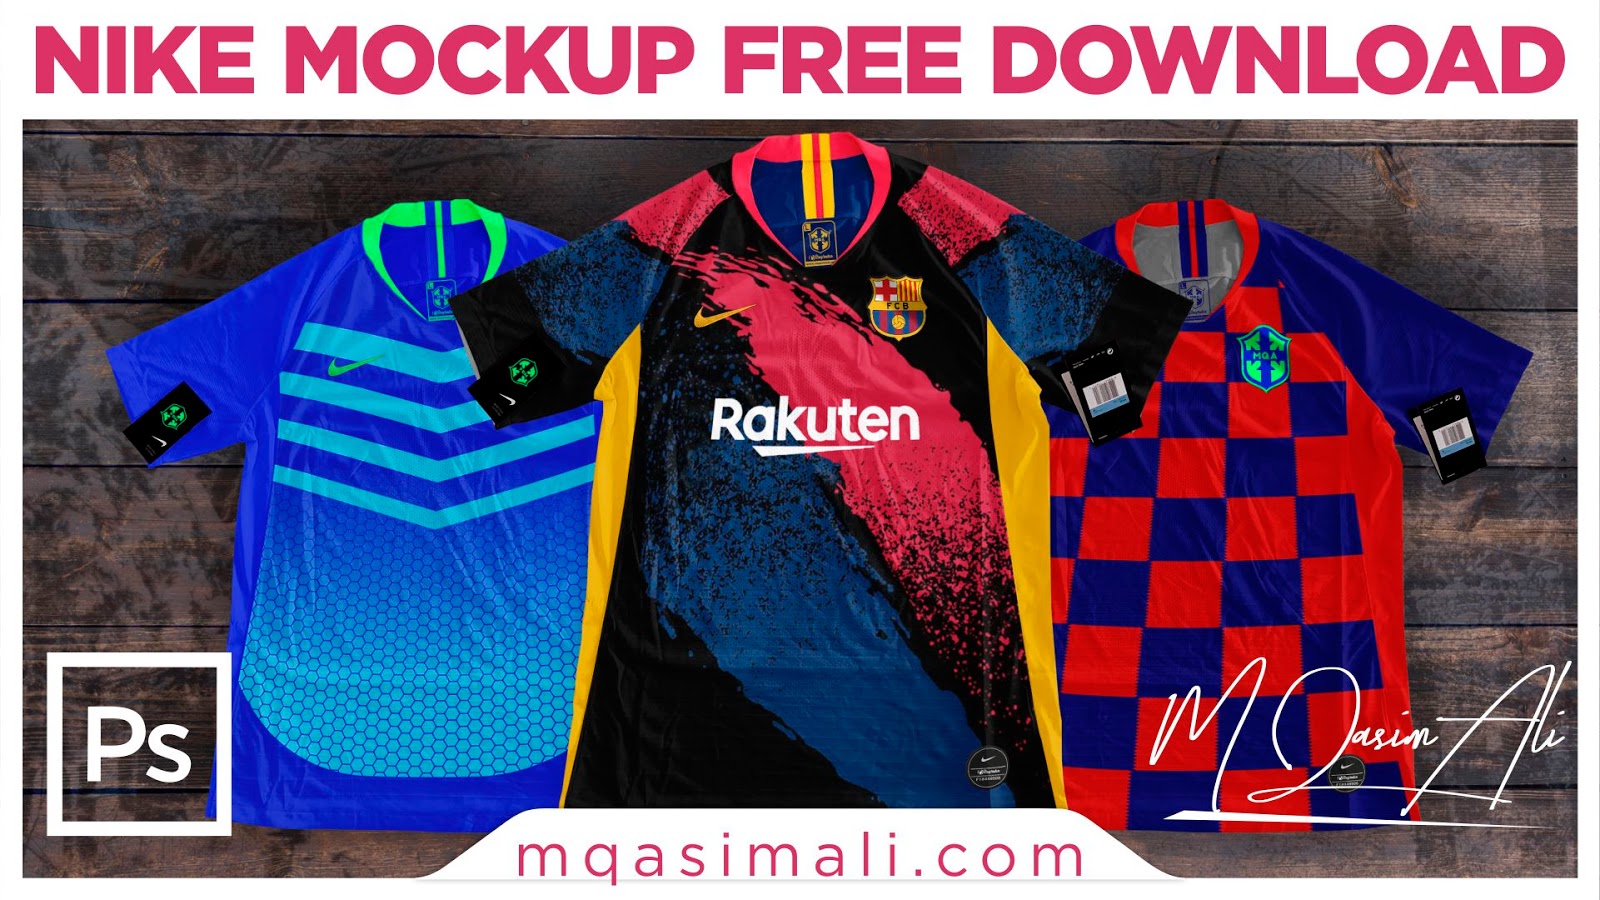 Nike Football Shirt Mockup Psd Template Free Download by M Qasim Ali - M Qasim Ali - Sports ...